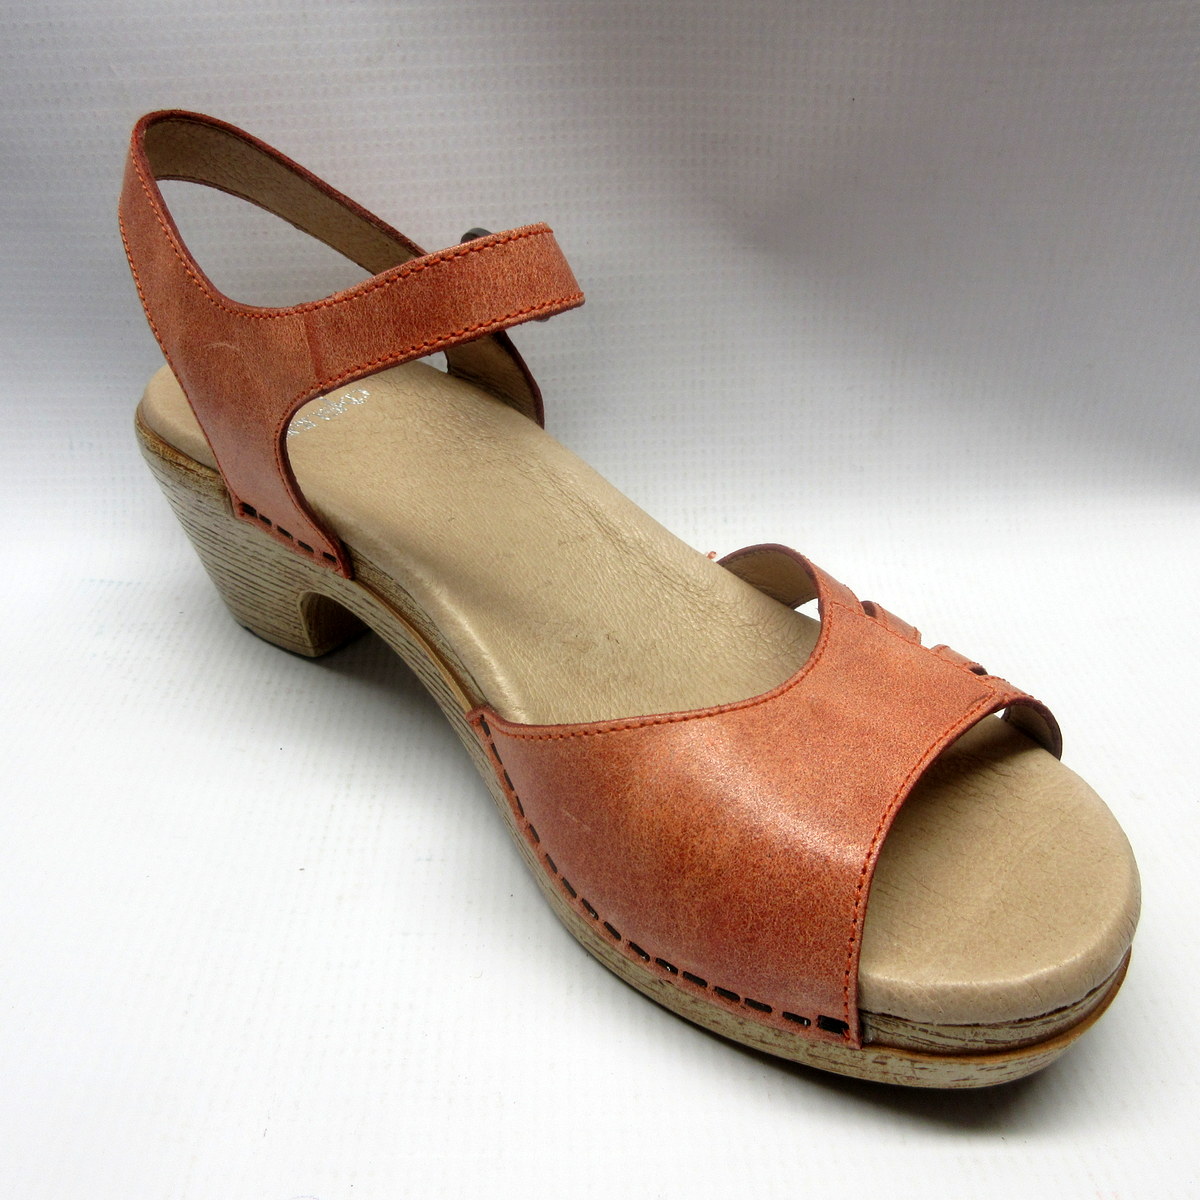 dansko sandals size 38